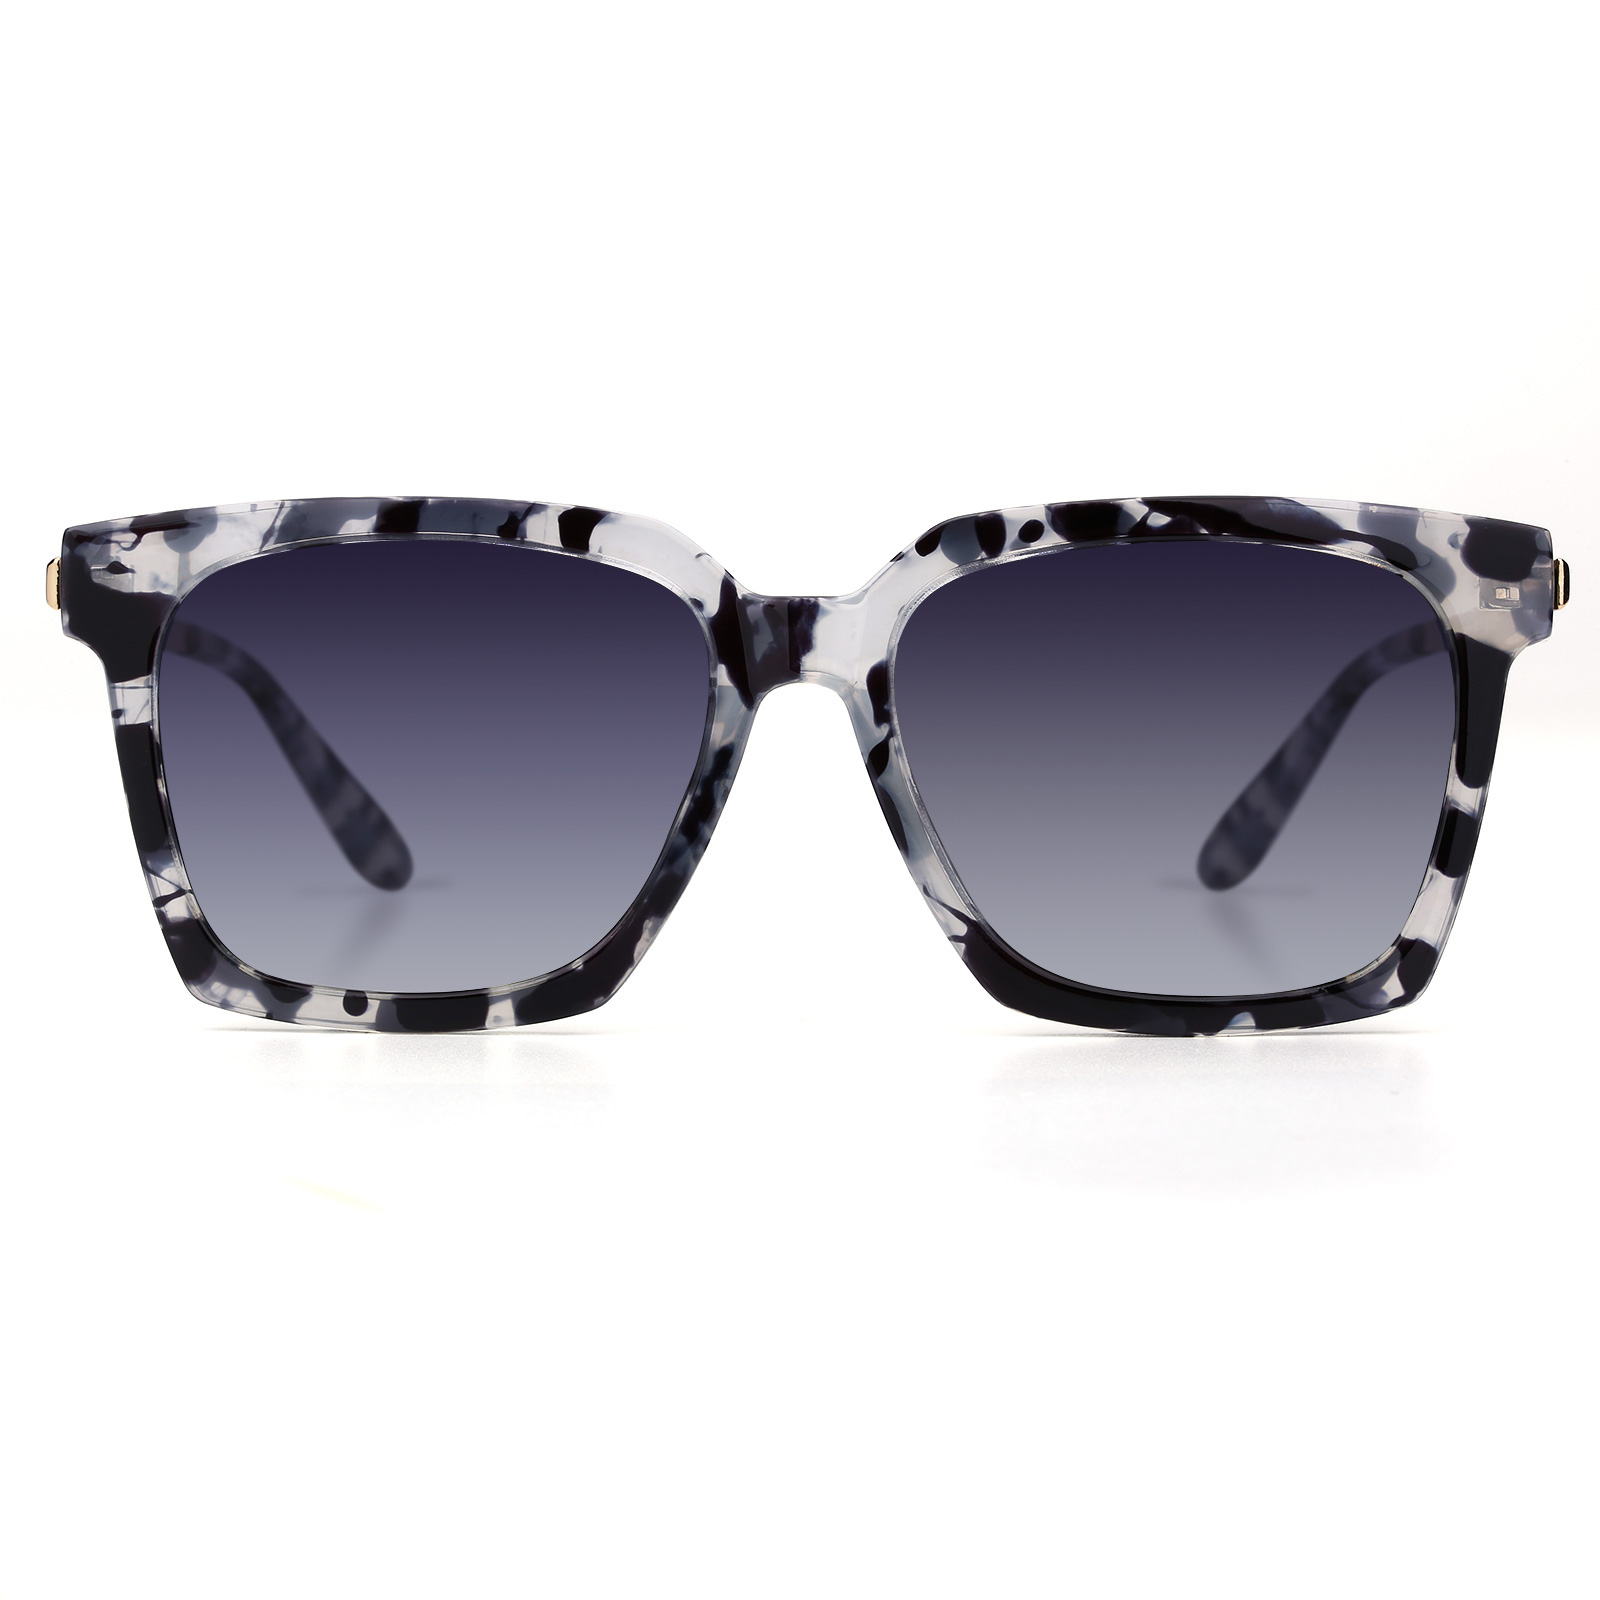 Polarized Sunglasses for Women Men Classic Square Lens Flexible Temple Stylish Design UV400 Protection